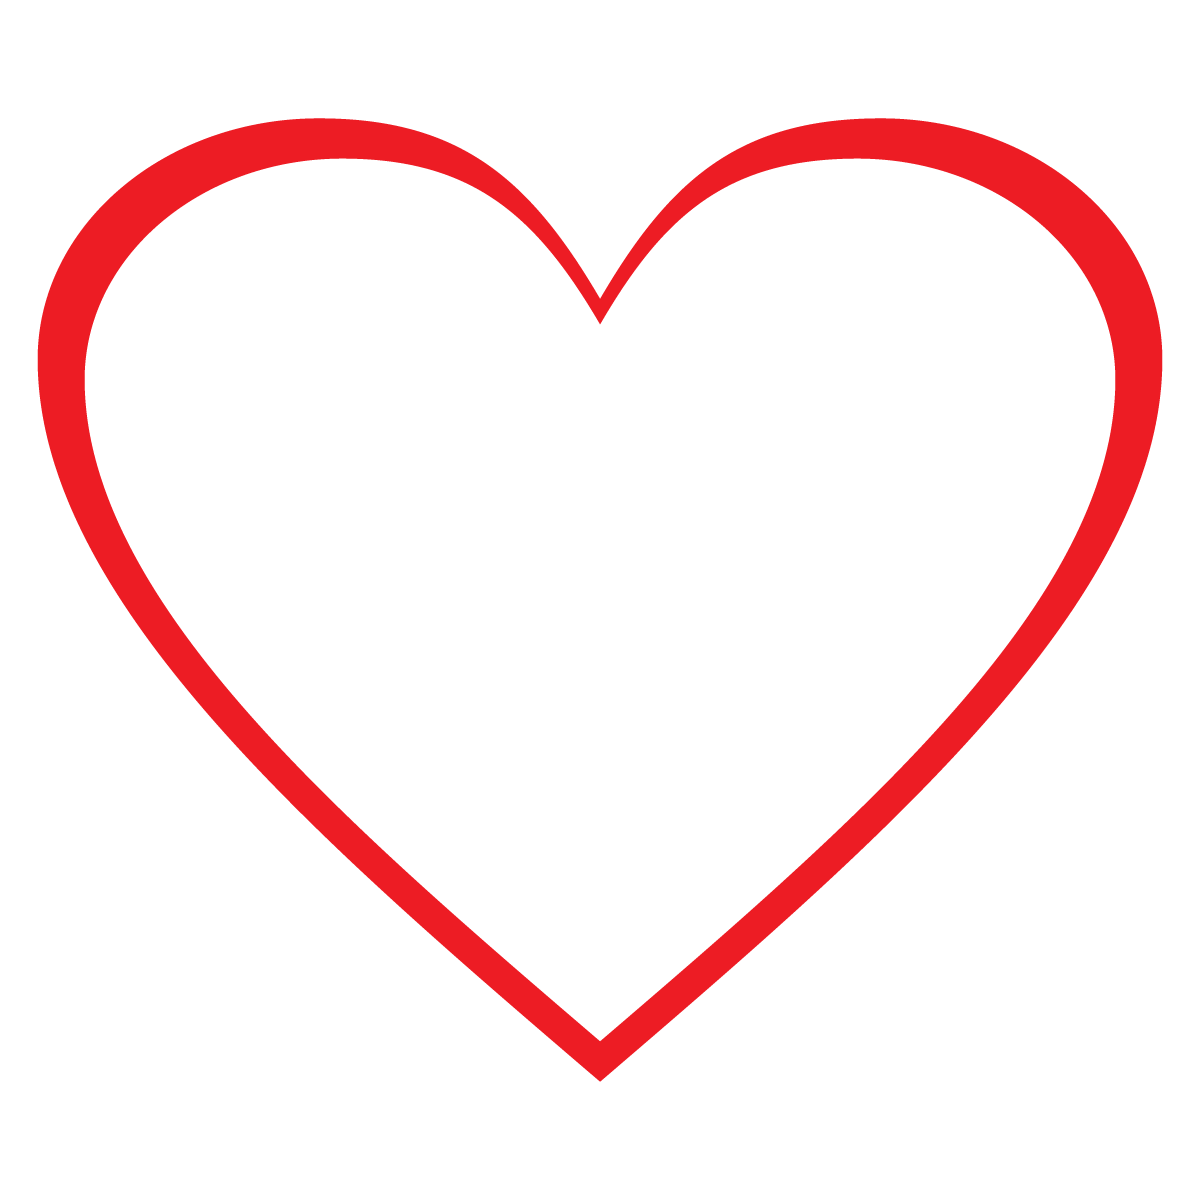 Hearts free heart clip art an - Free Clipart Of Hearts